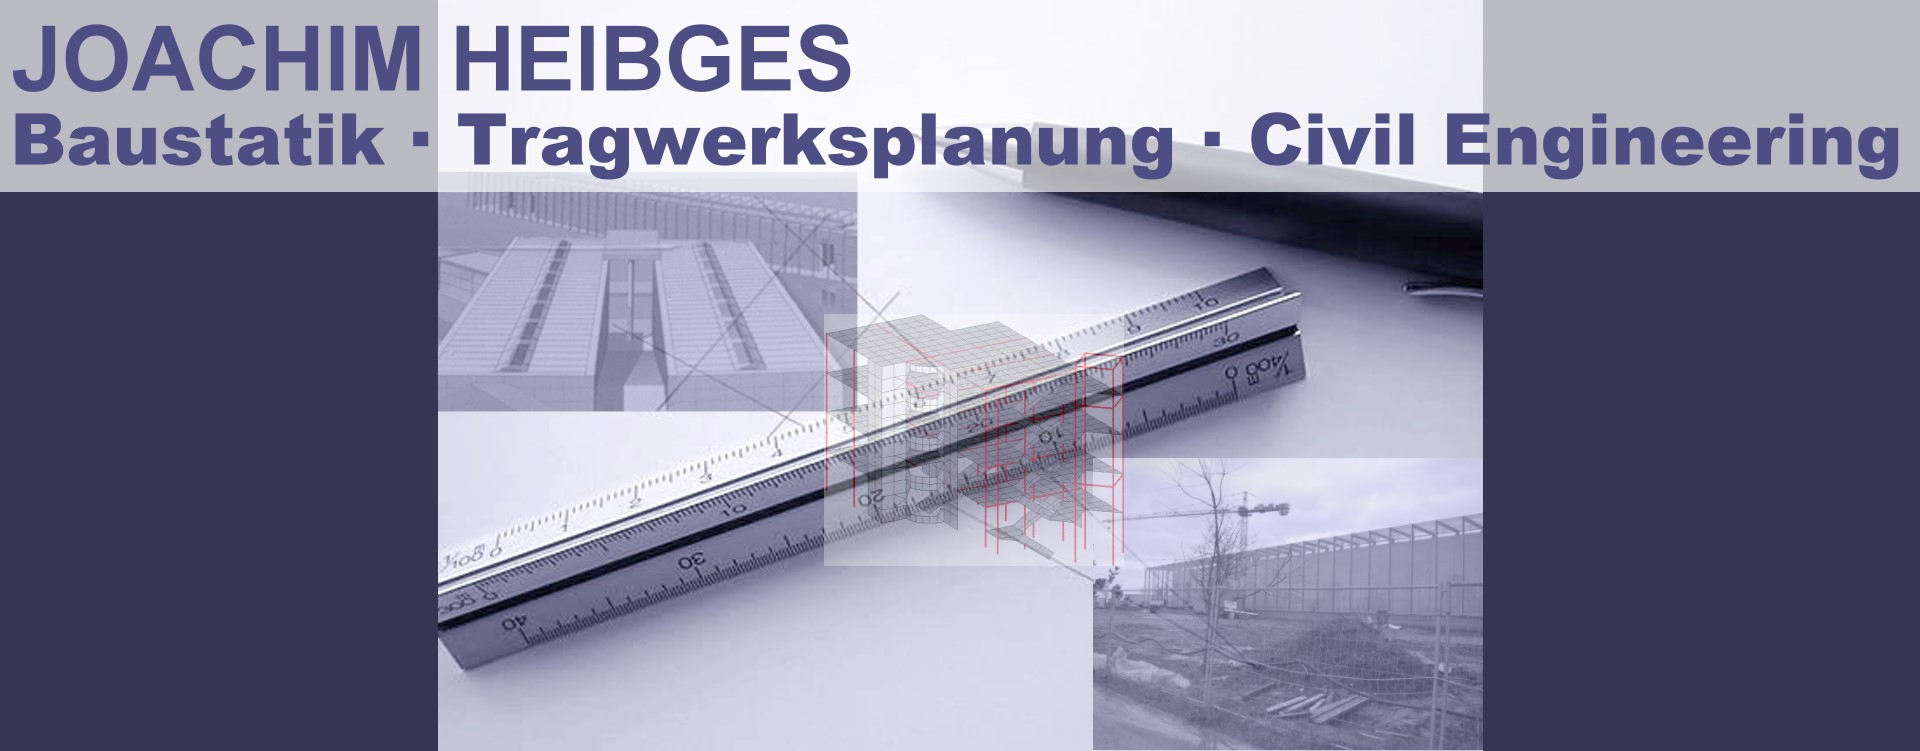 Joachim Heibges - Baustatik - Tragwerksplanung - Civil Engineering